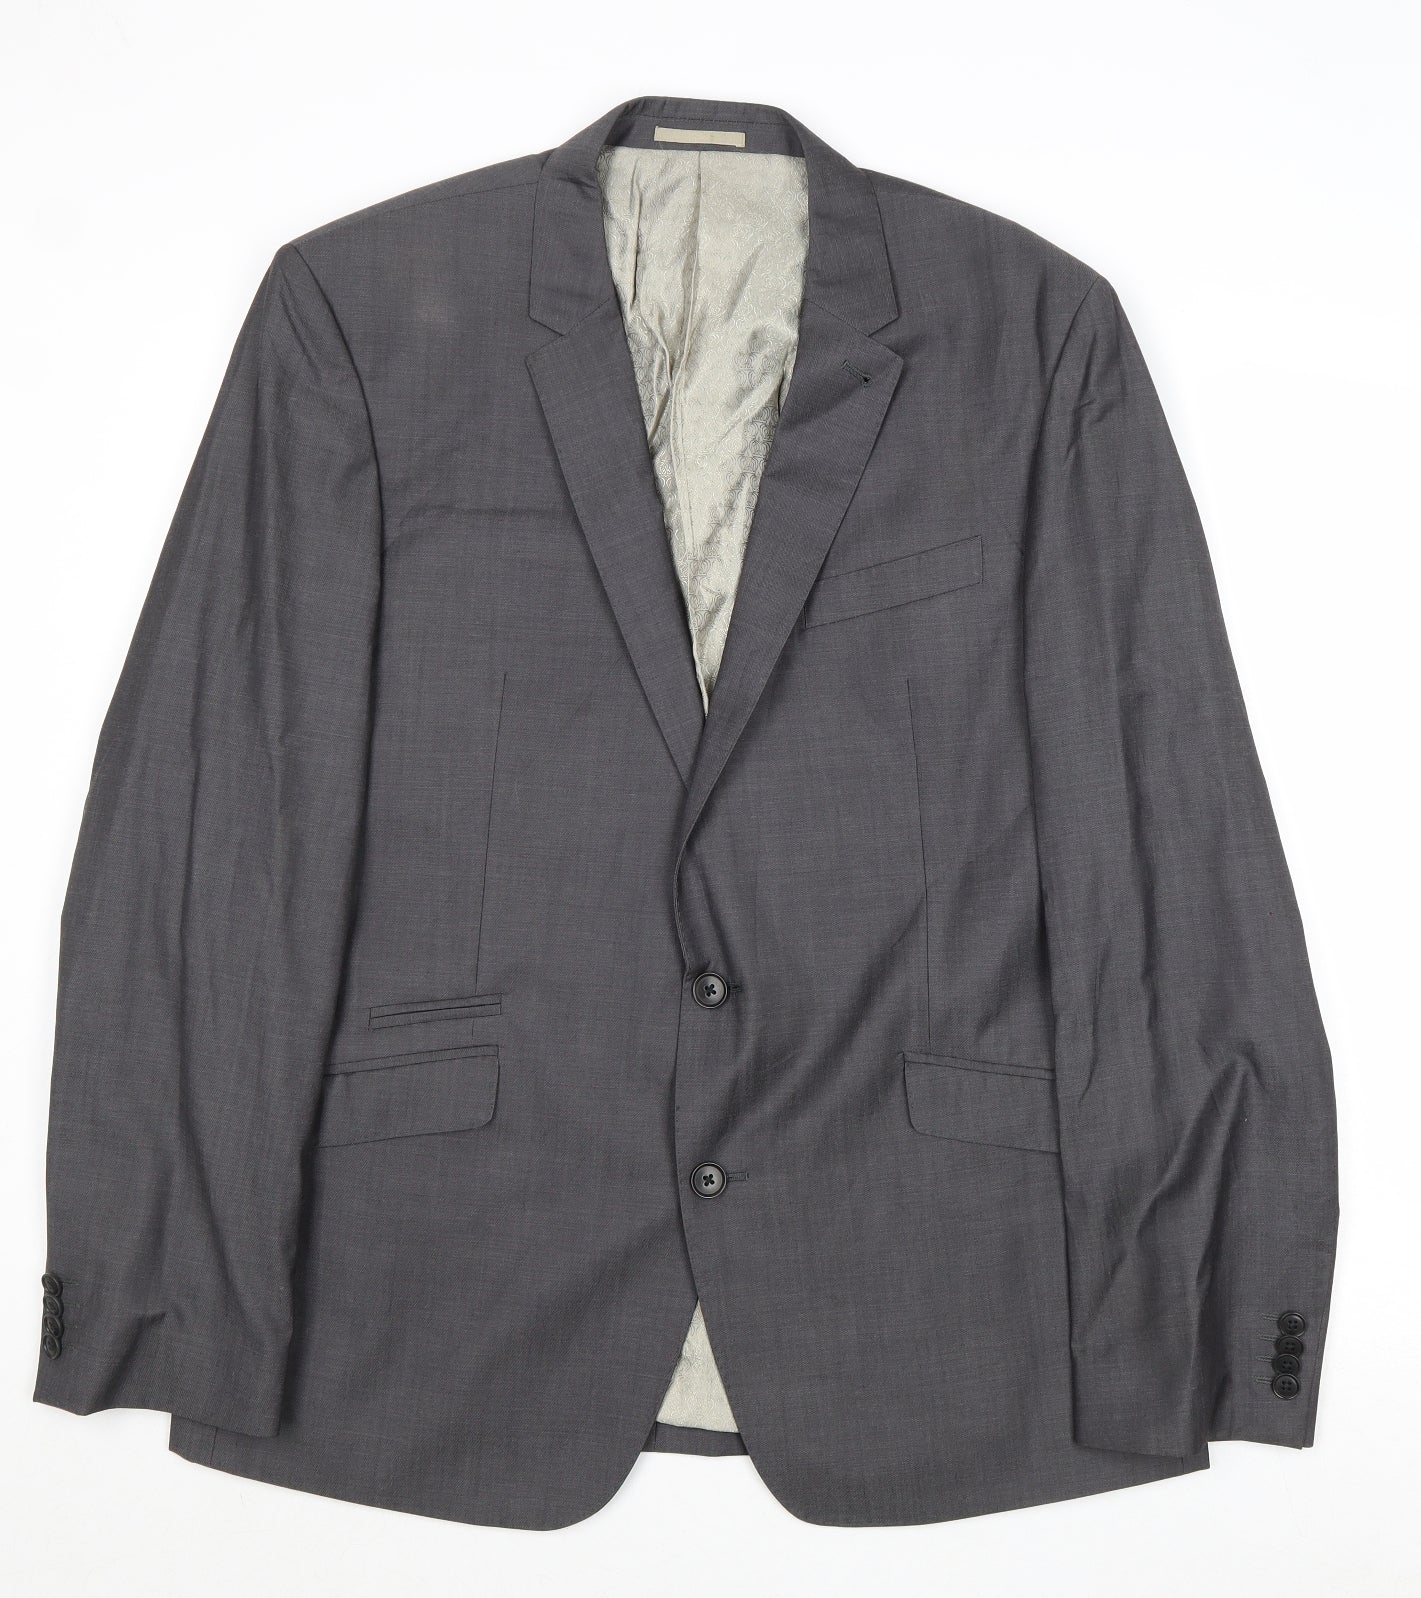 NEXT Mens Grey Wool Jacket Suit Jacket Size 44 Regular